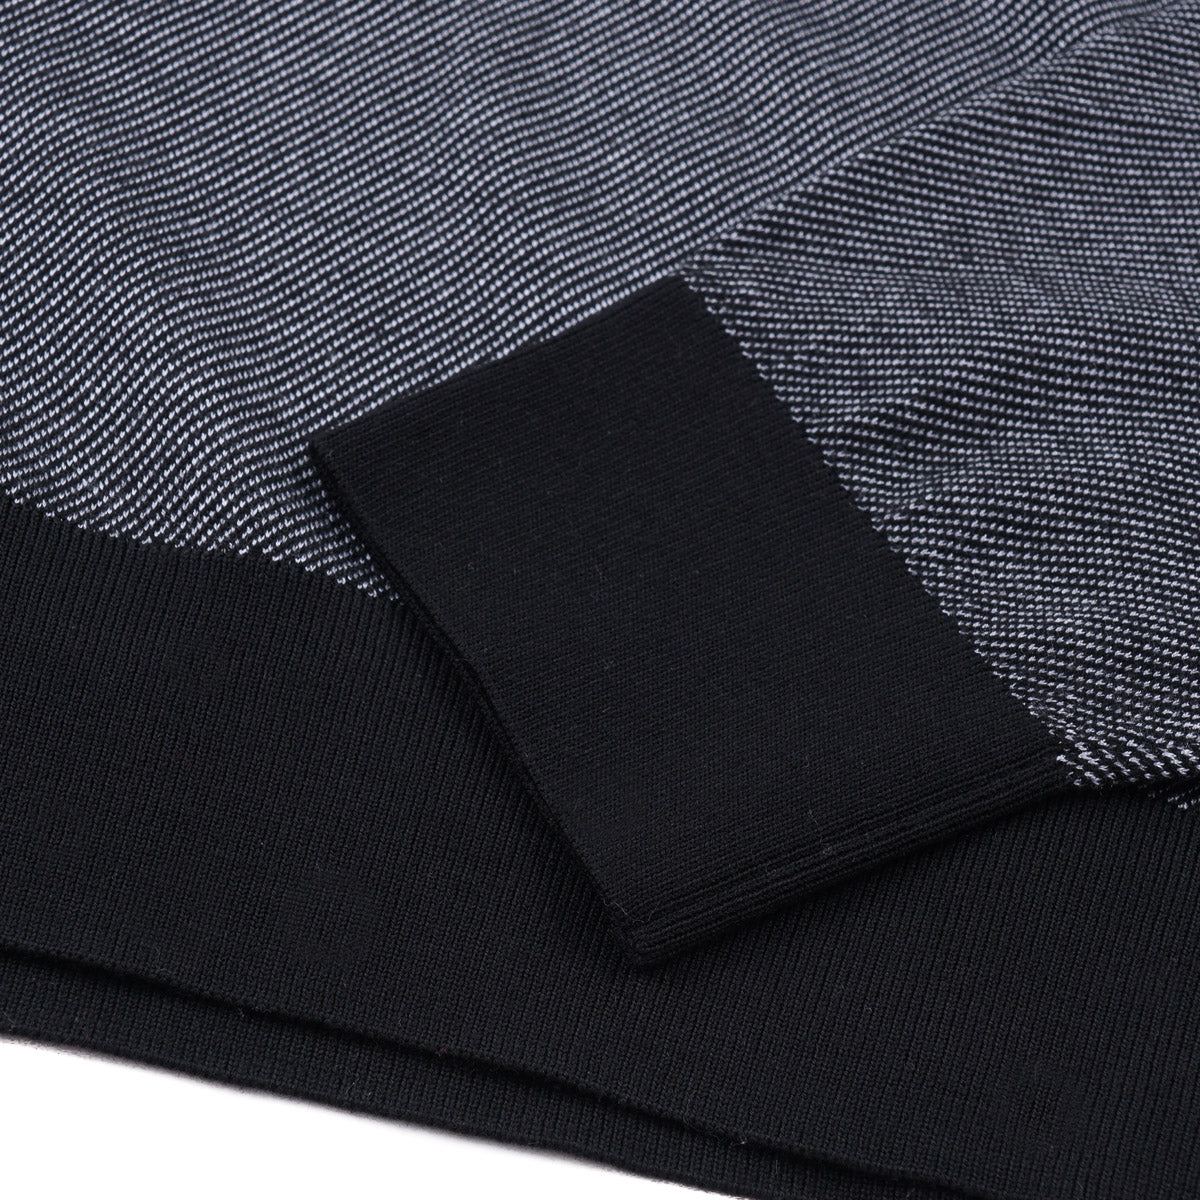 Cruciani Superfine Cashmere-Silk Sweater - Top Shelf Apparel